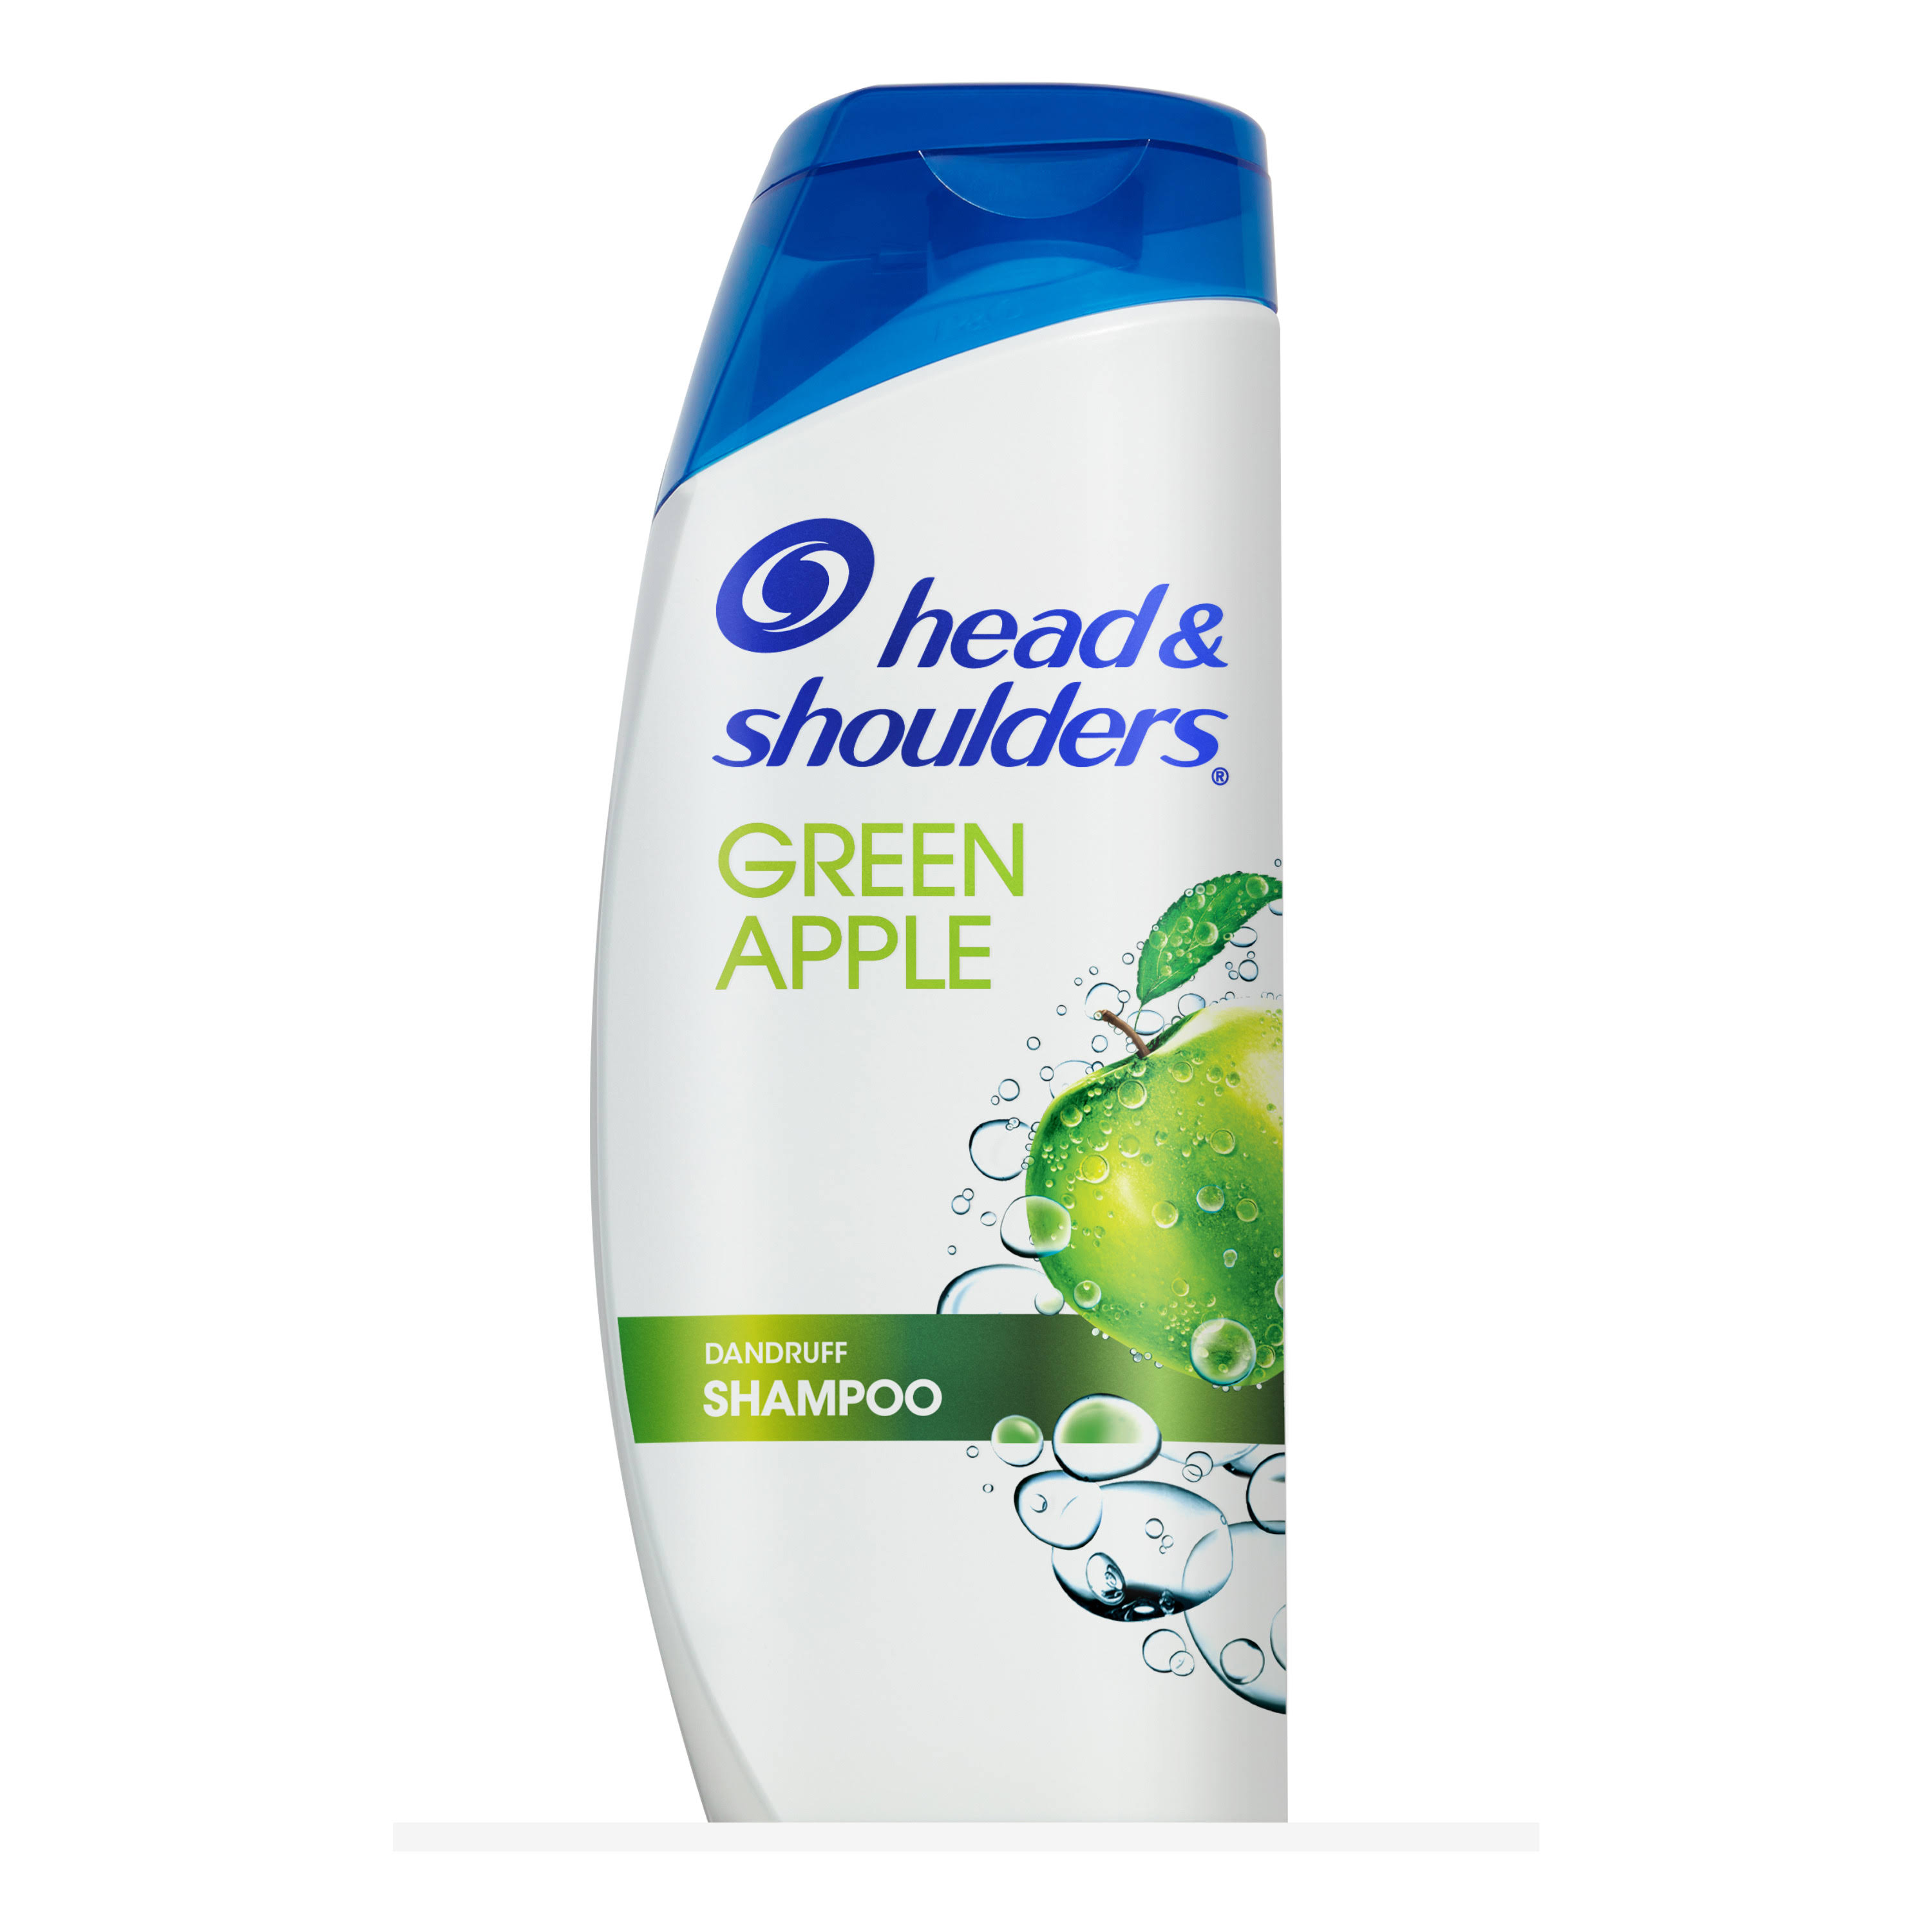 Head & Shoulders Dandruff Shampoo - 700ml, Green Apple